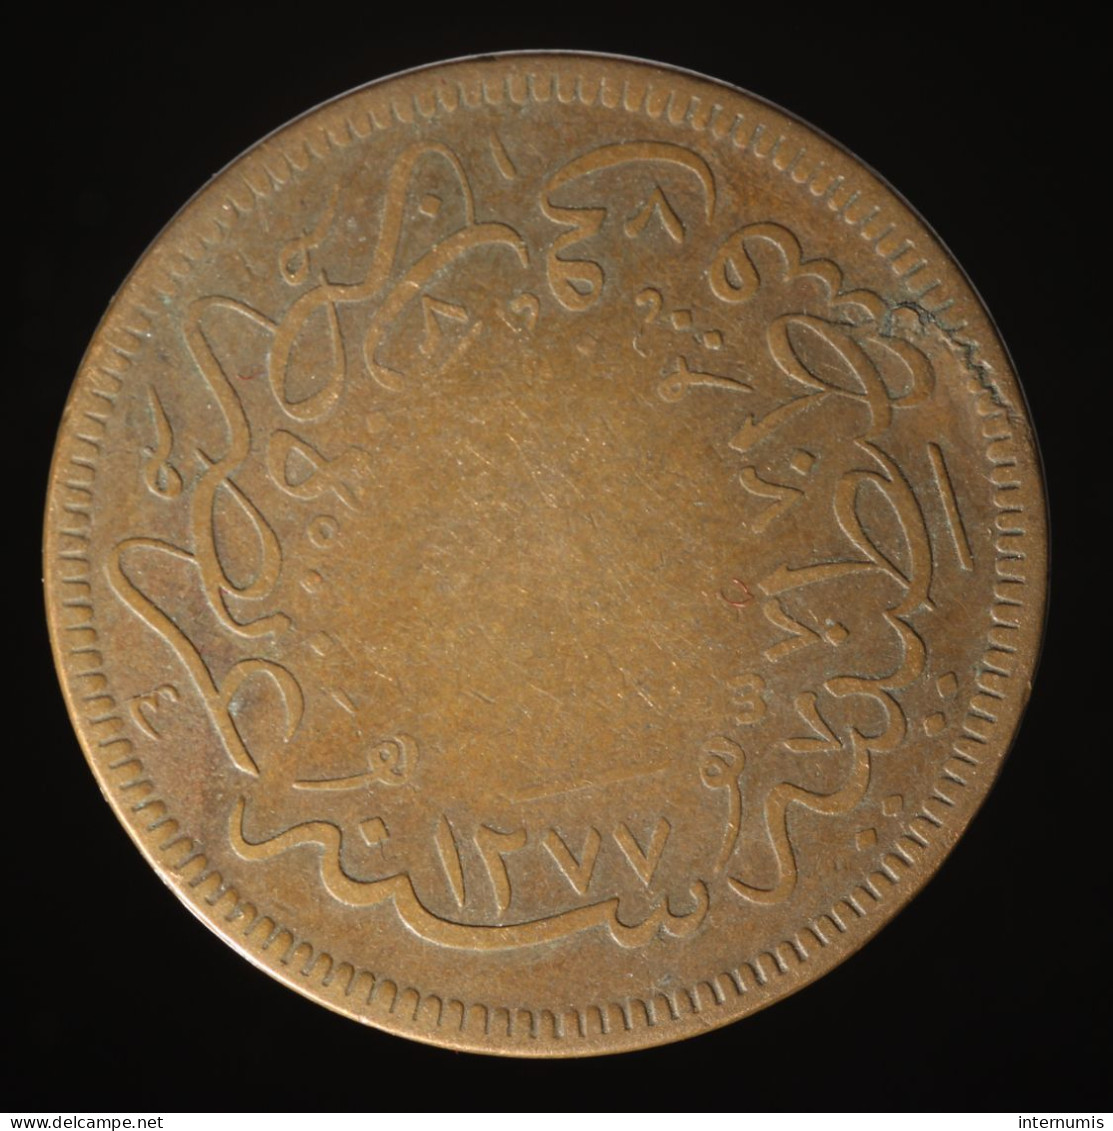  Turquie / Turkey, Abdulaziz, 40 Para, AH 1277//4 (1864), , Cuivre (Copper), TB+ (VF),
KM#702 - Egypte